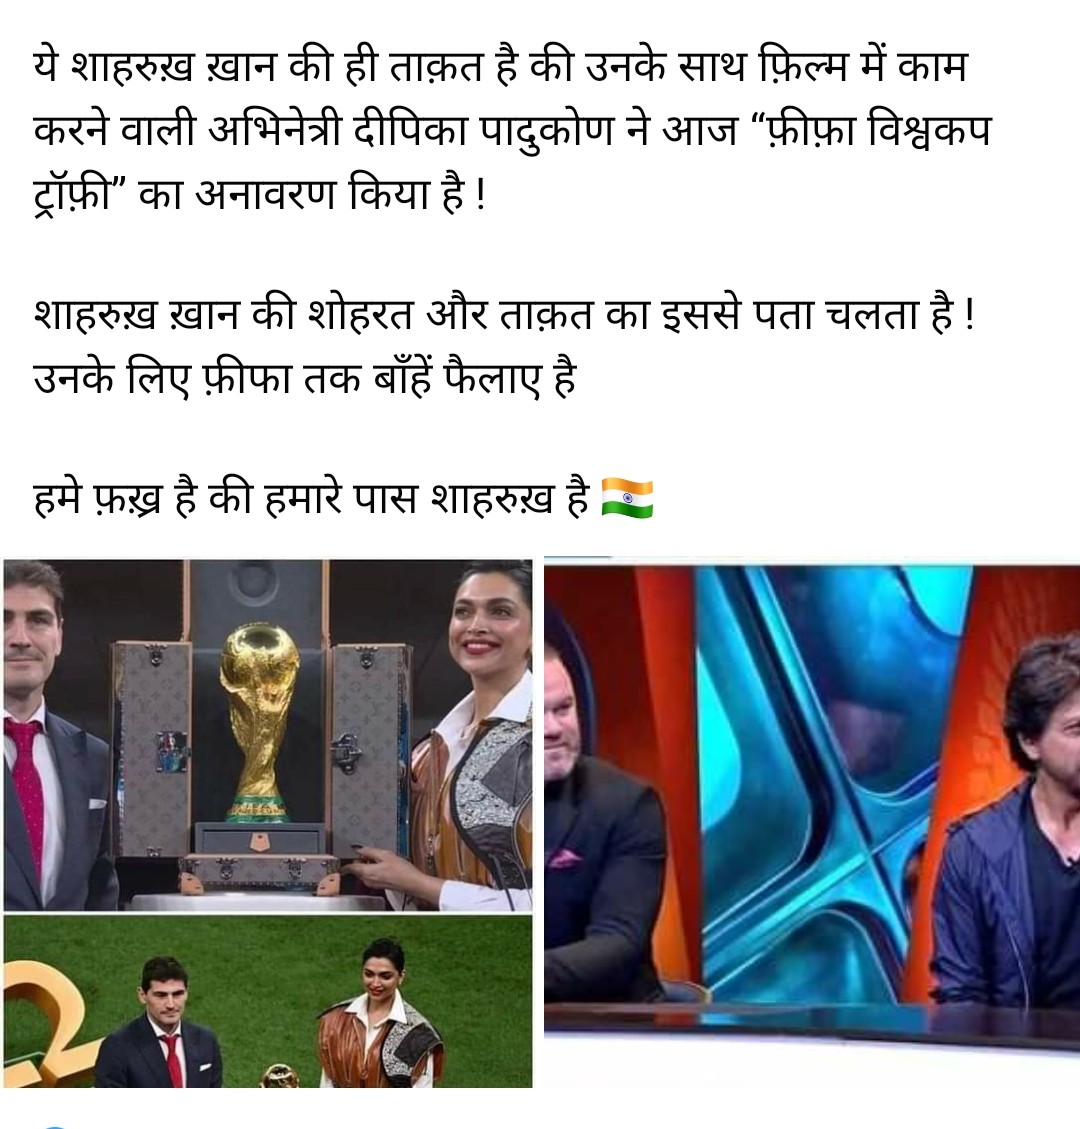 @SirRavishFC Yeh Shahrukh Khan ki hi taaqt hai that his film co-star Deepika Padukone has unveiled the FIFA World Cup trophy today! This shows the power and fame of Shahrukh Khan! we have shahrukh